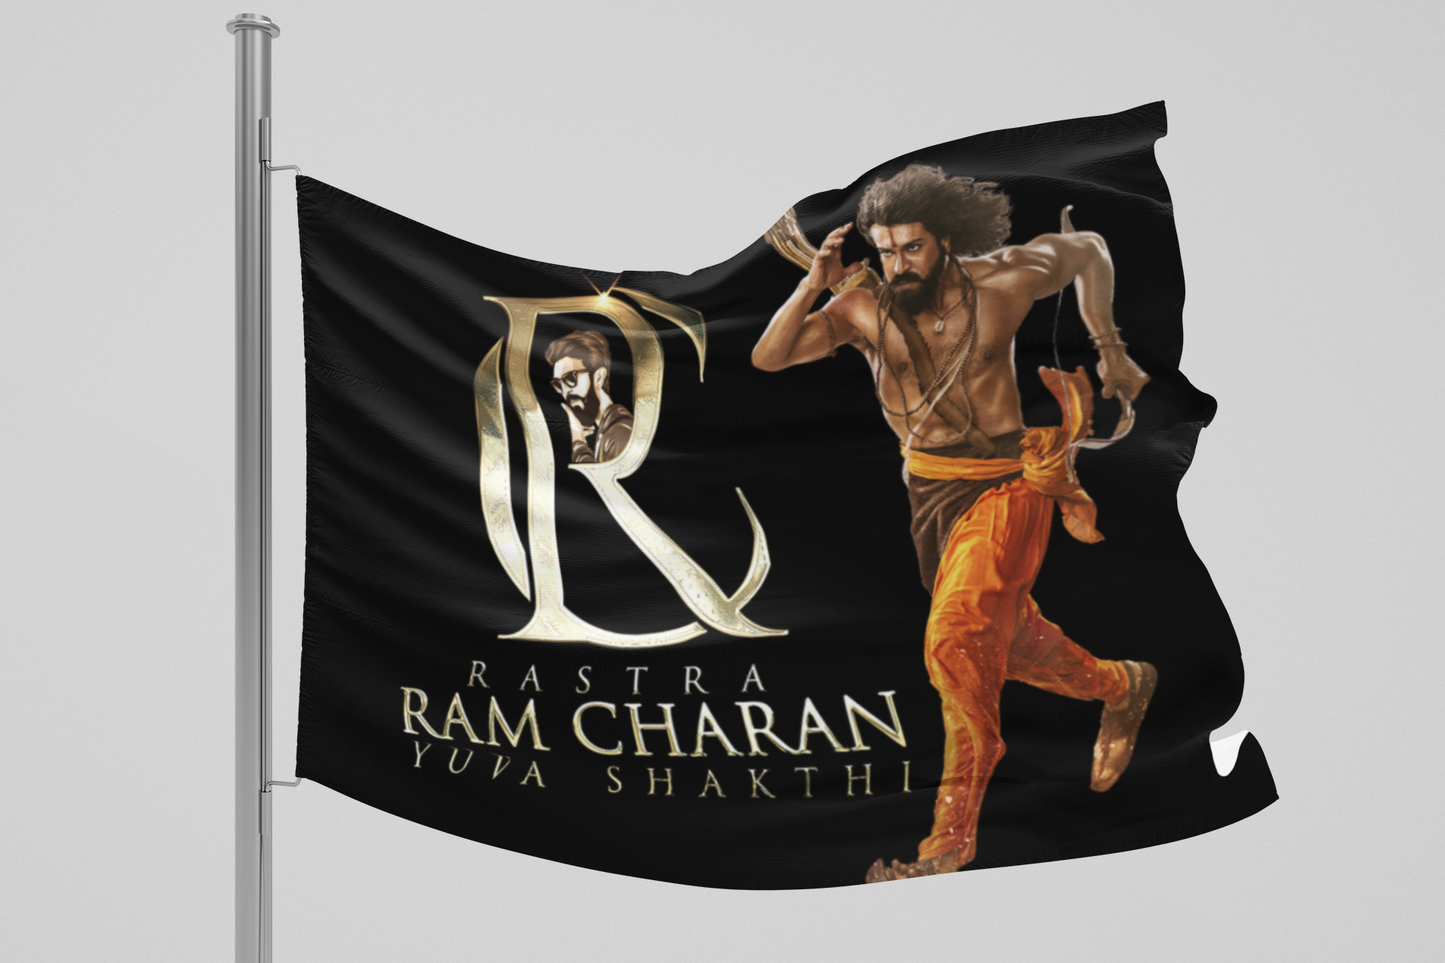 Ram Charan Yuva Shakthi Digital Printed Flags